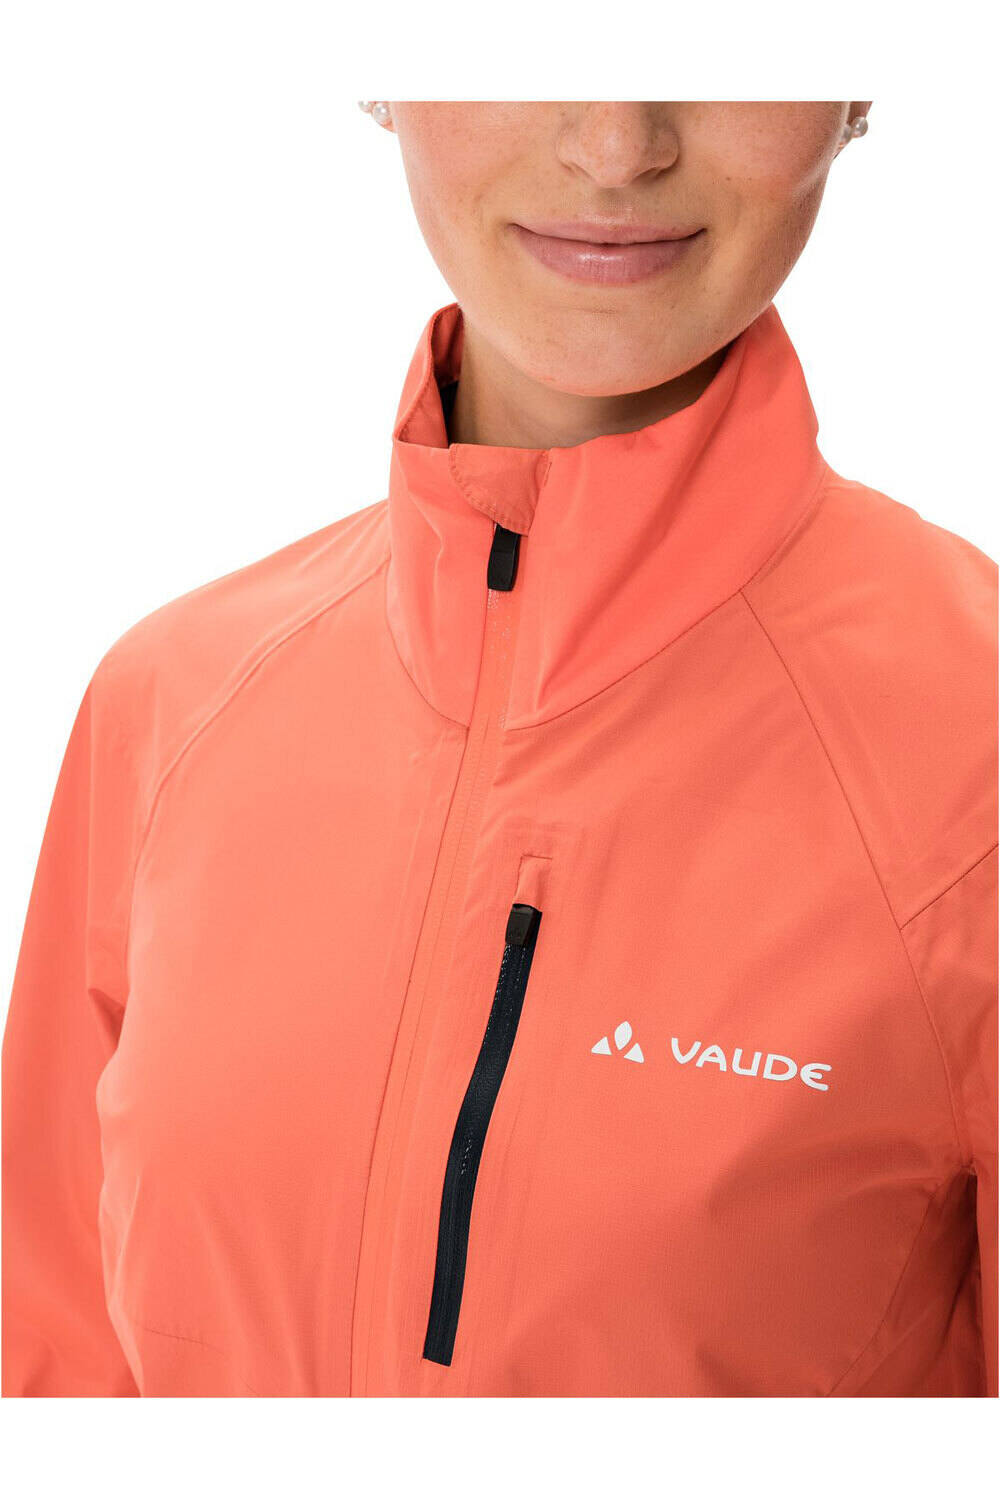 Vaude chaqueta impermeable ciclismo mujer Women's Kuro Rain Jacket vista detalle